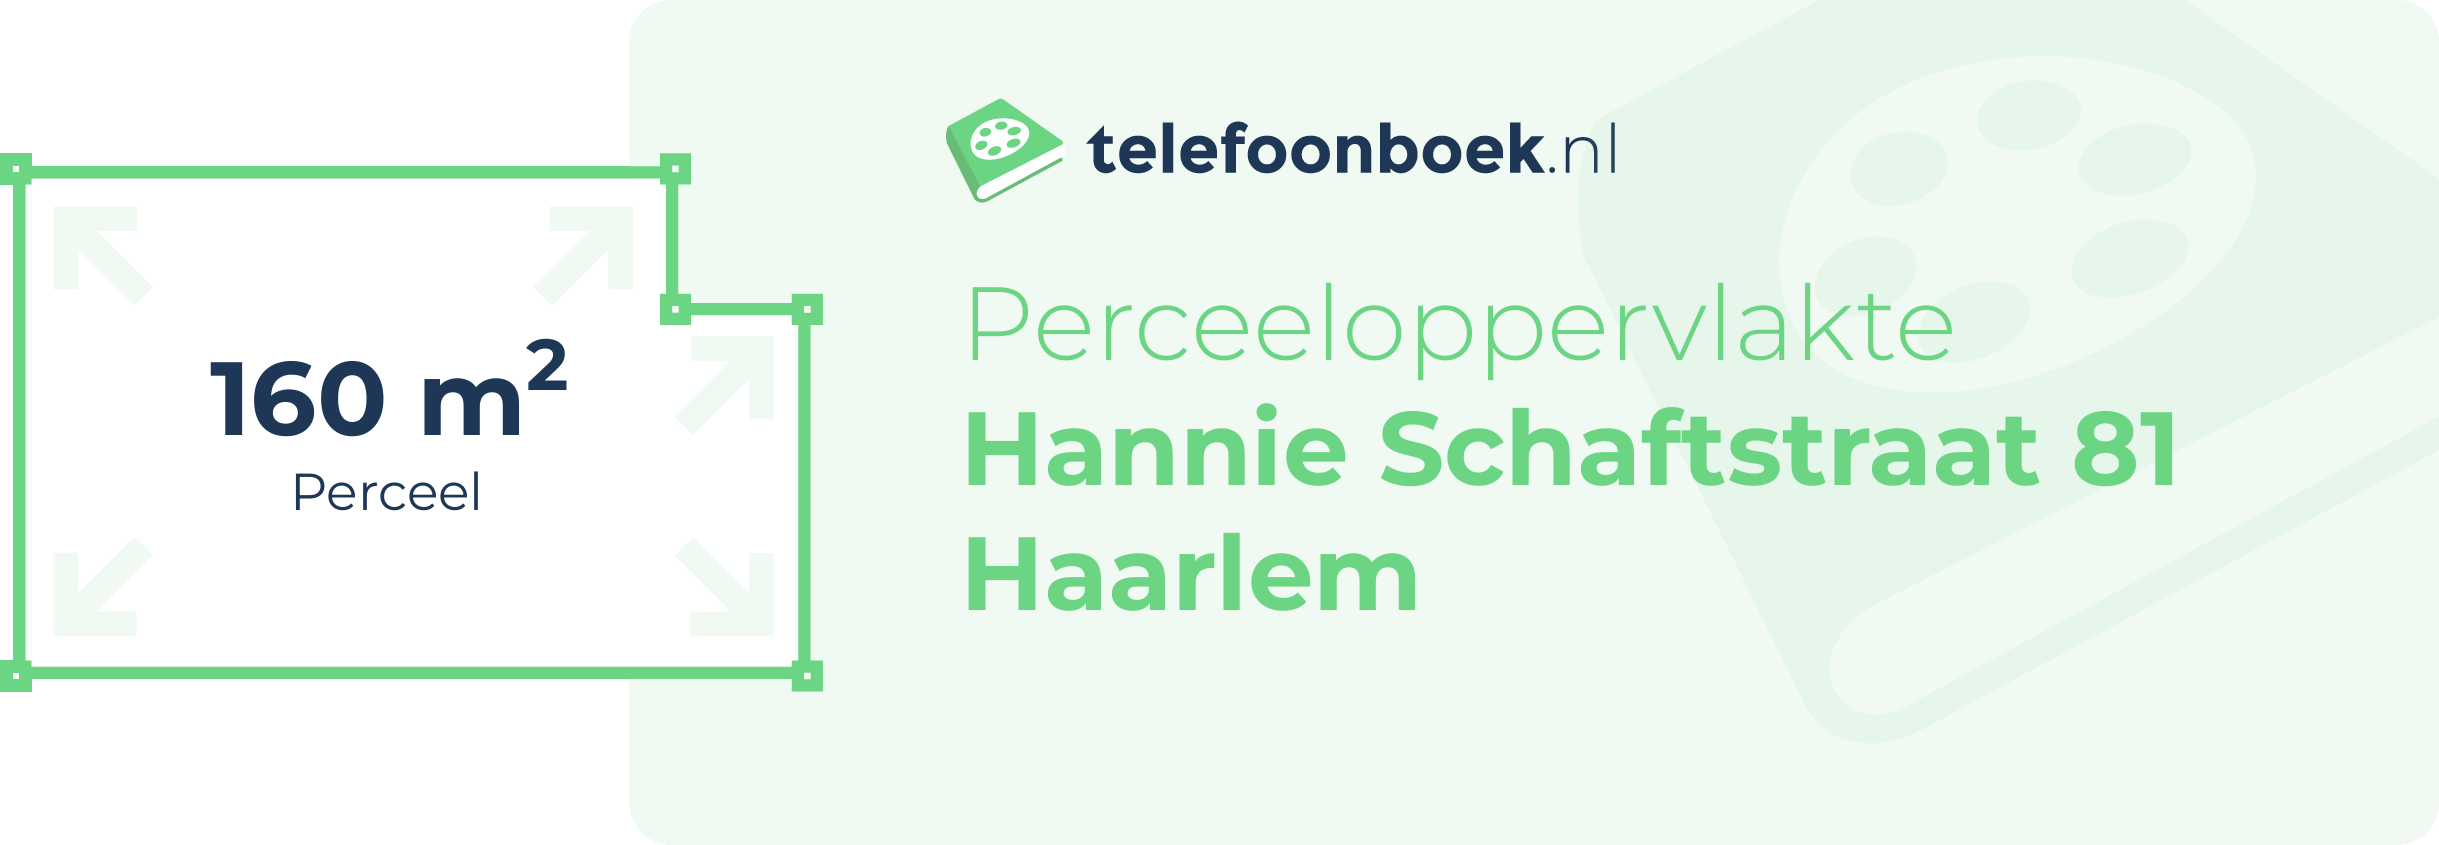 Perceeloppervlakte Hannie Schaftstraat 81 Haarlem